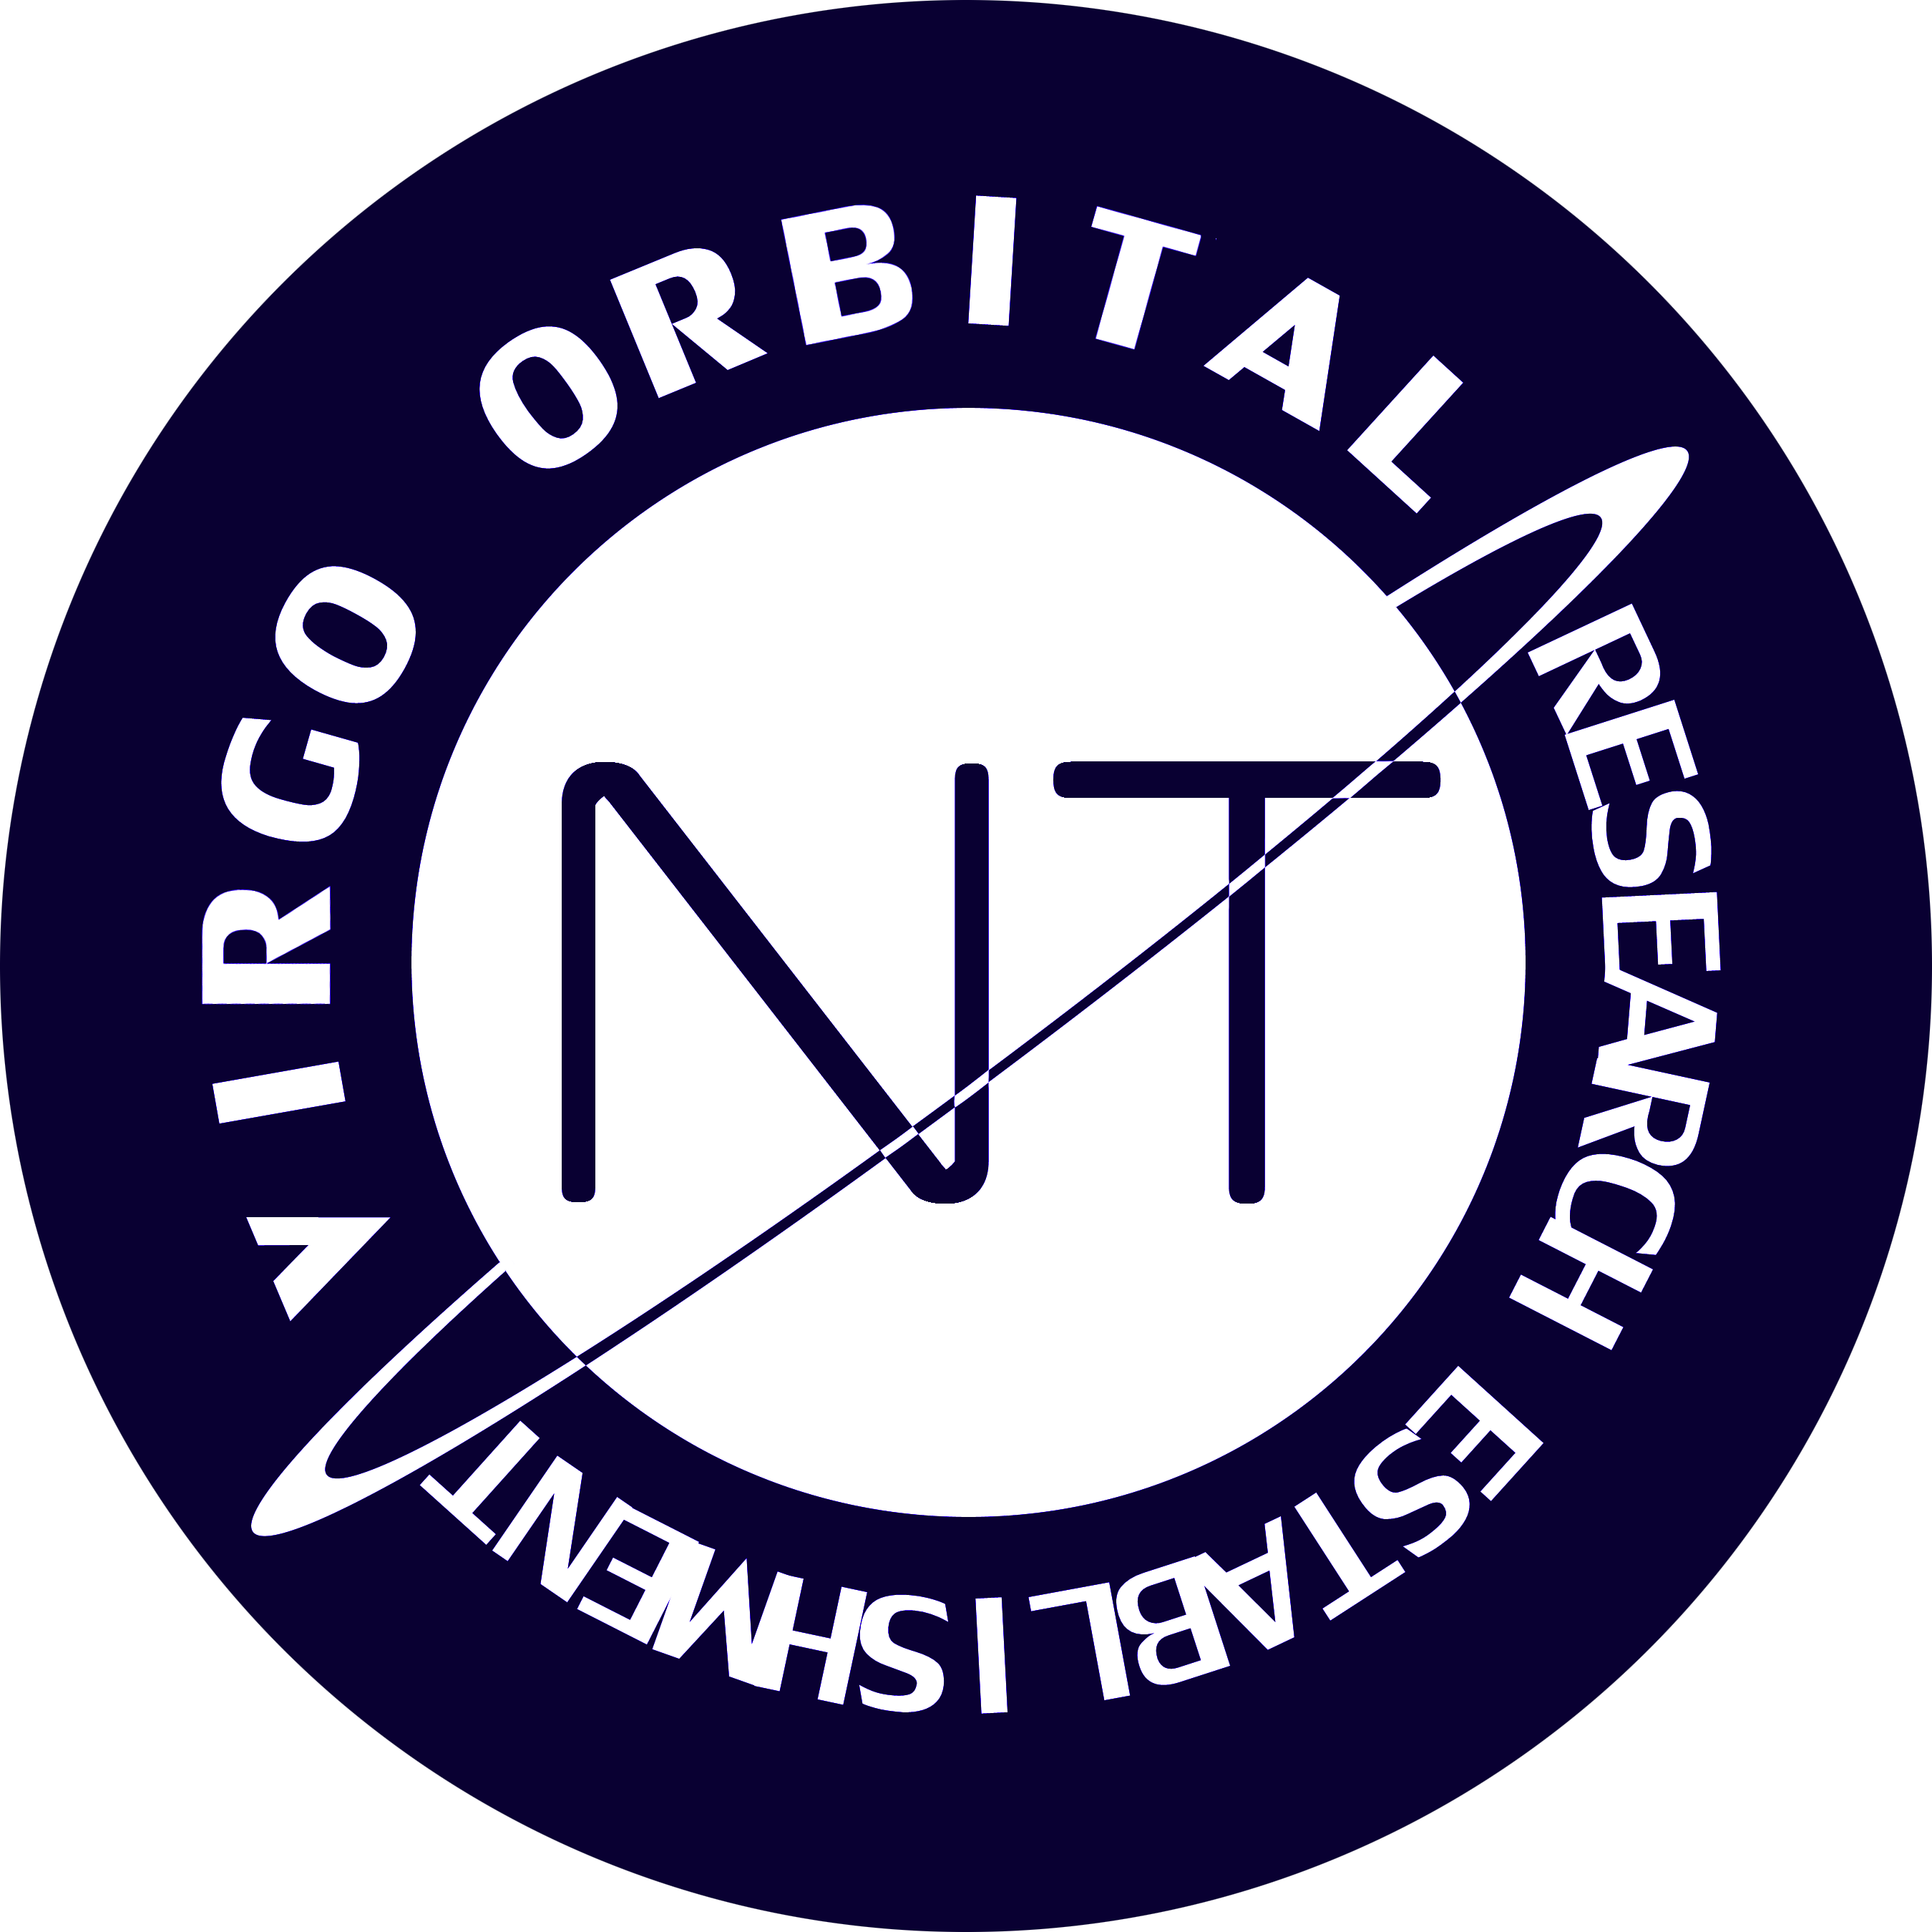 Virgo Orbital Research Establishment Logo